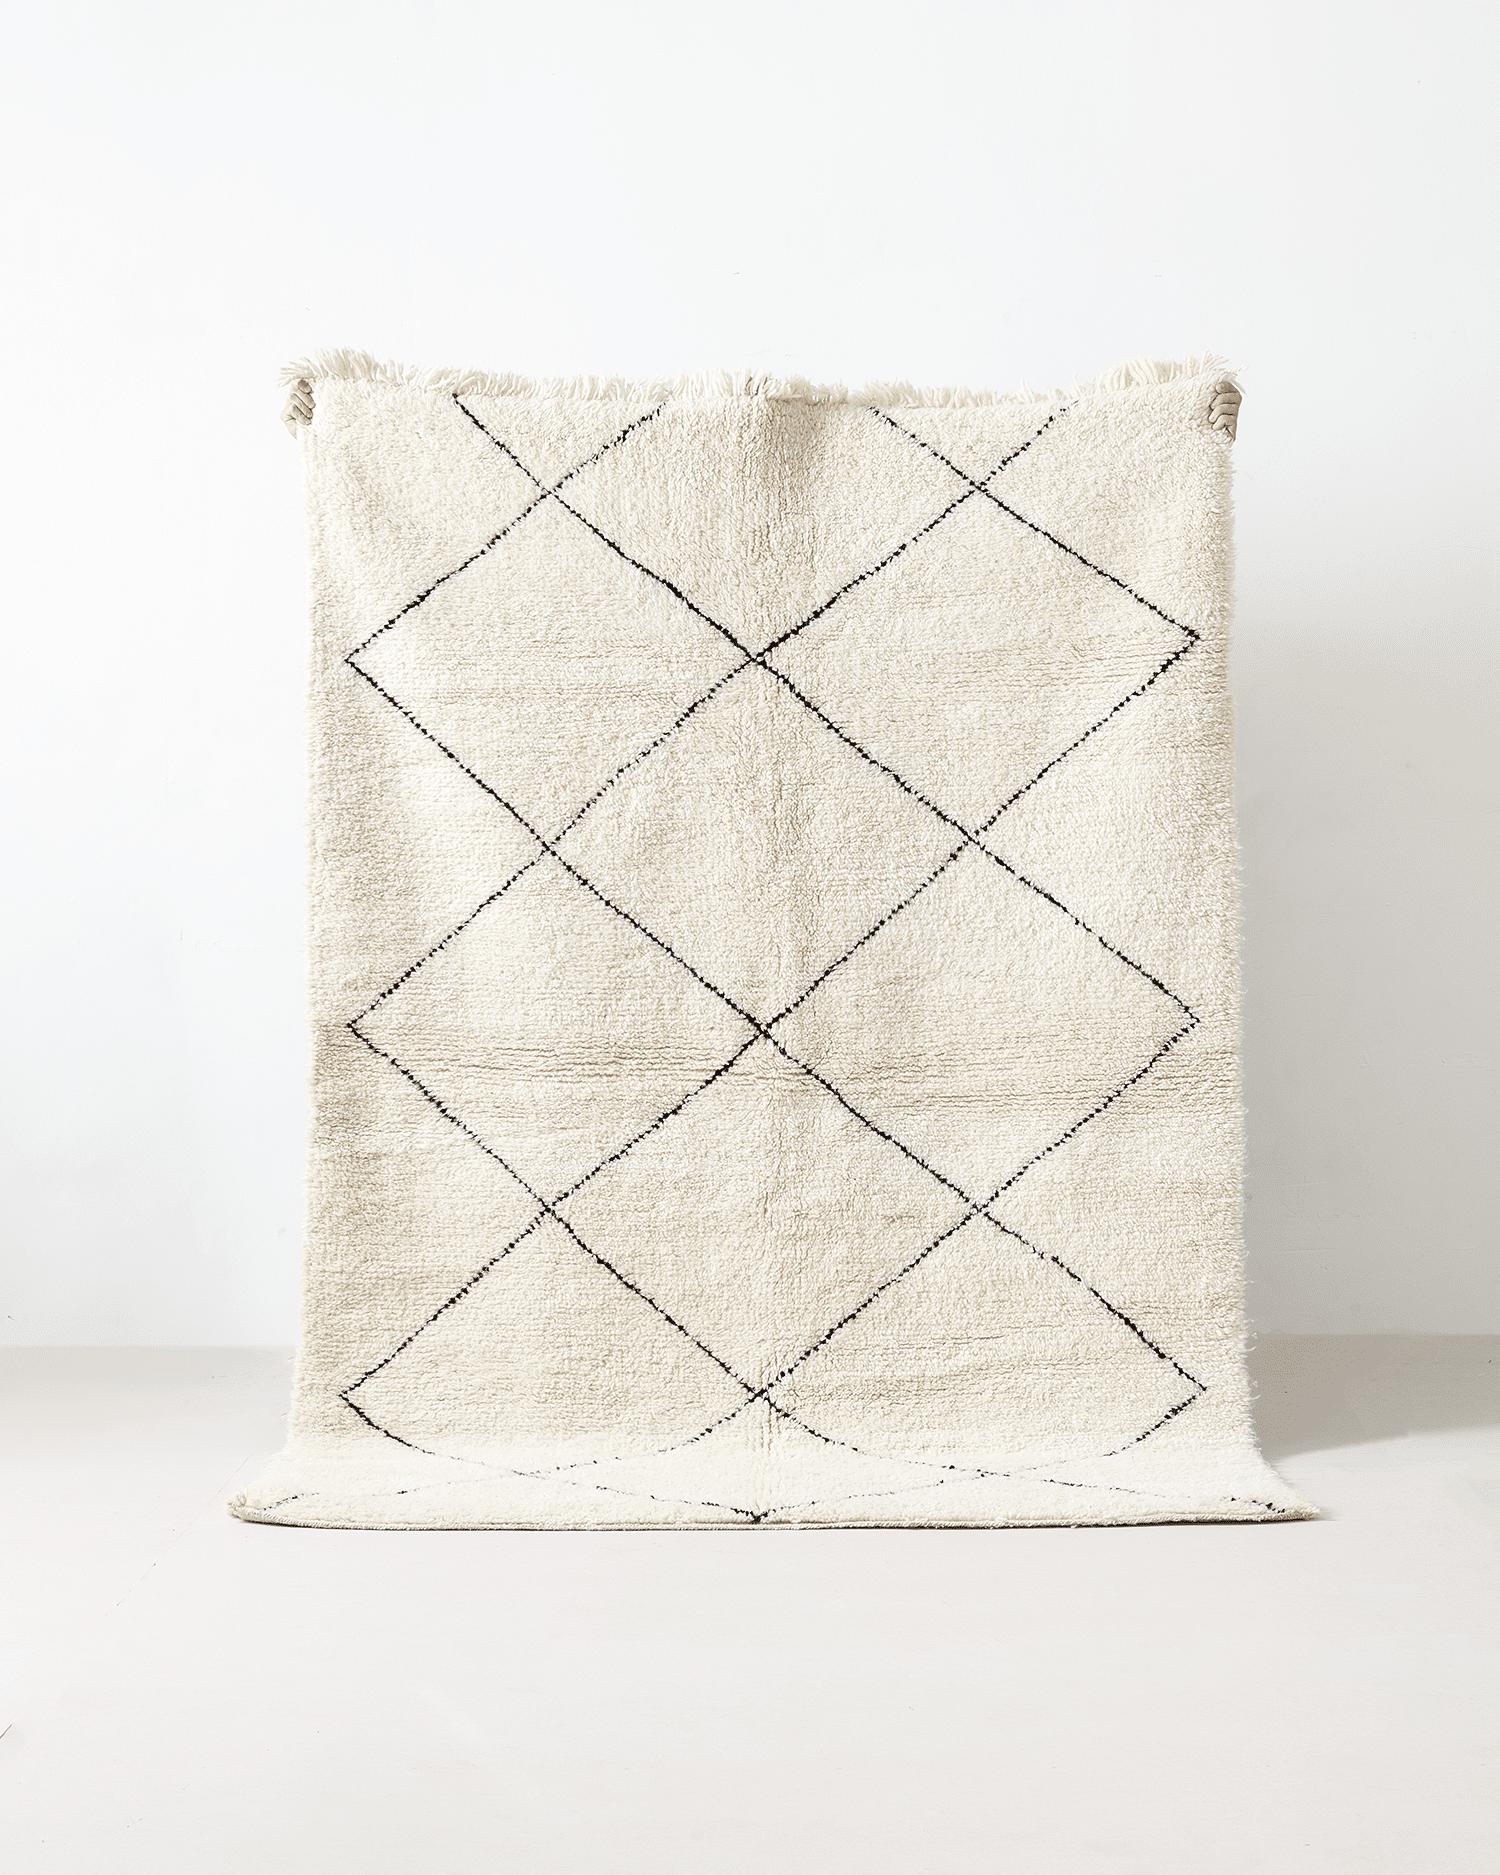 Beni Ourain with diamond-mesh pattern